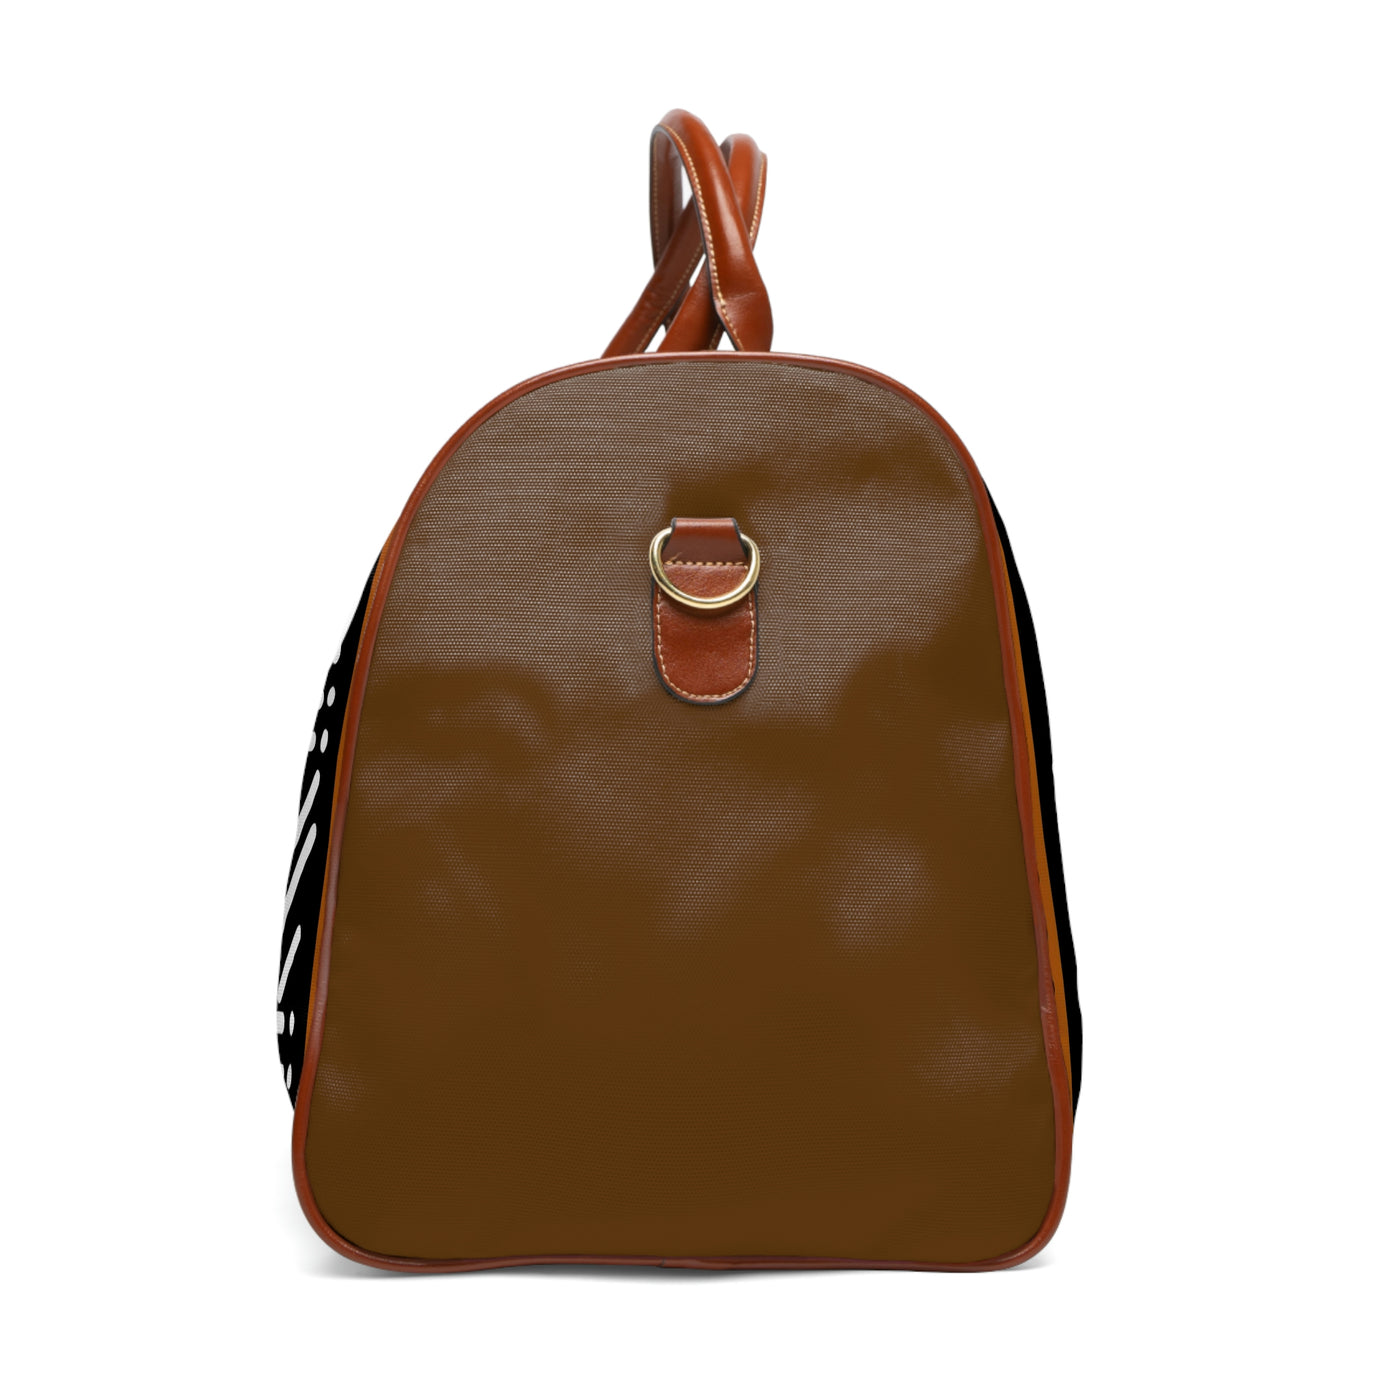 Mudcloth Light Brown Travel Bag